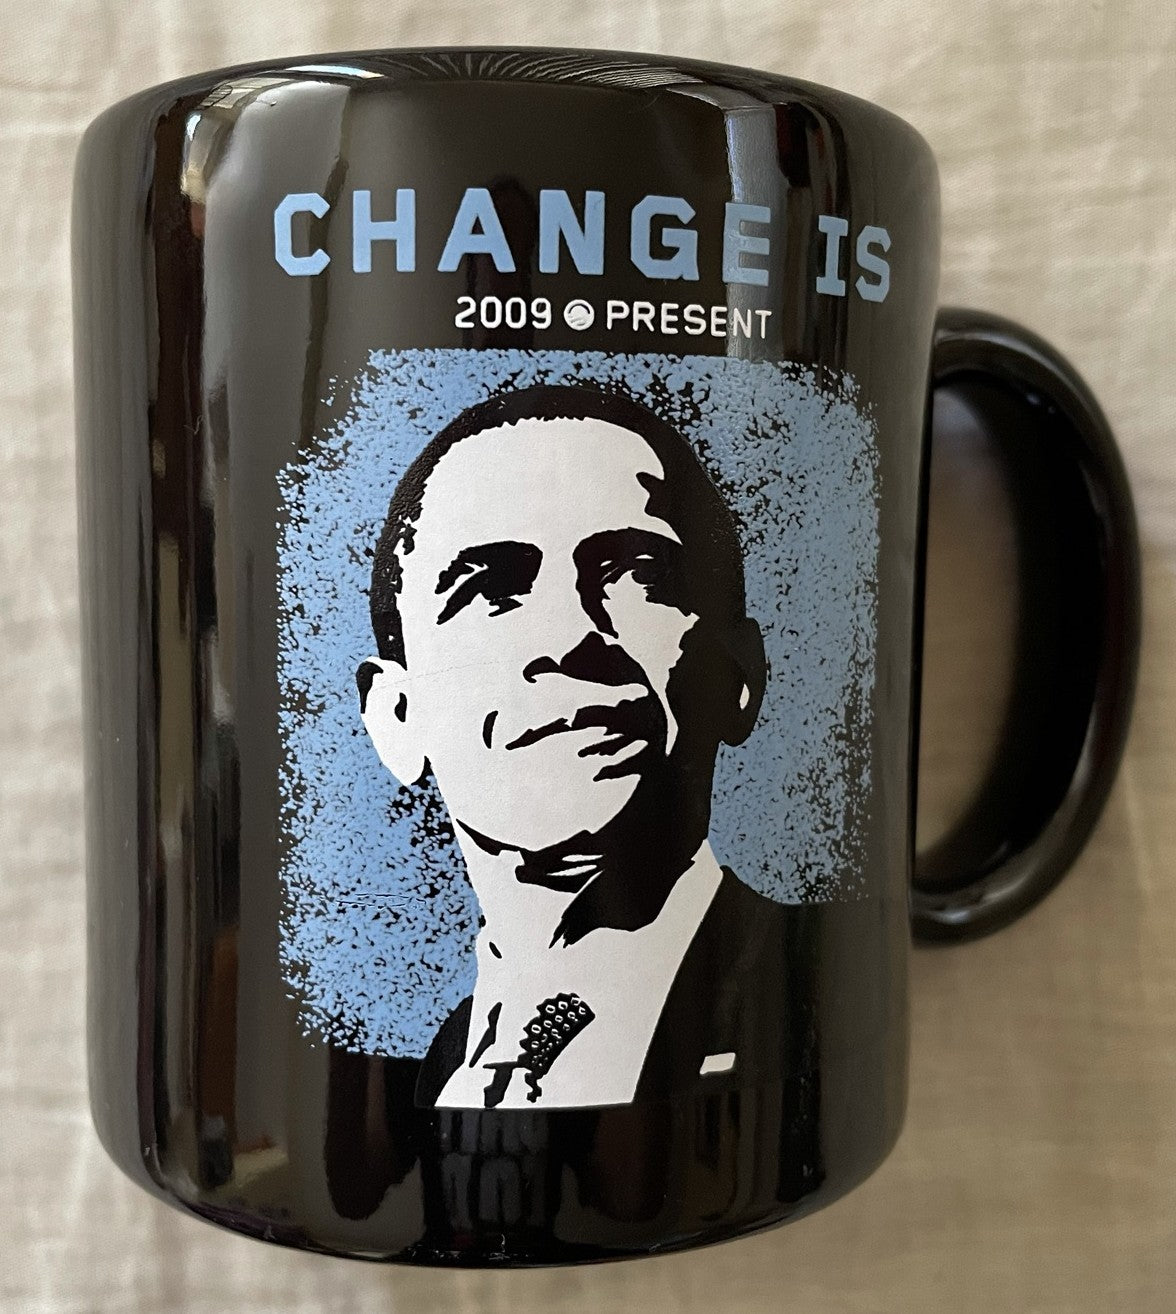 Barack Obama 2012 campaign Change Is 2009 to present ceramic coffee mug NEW